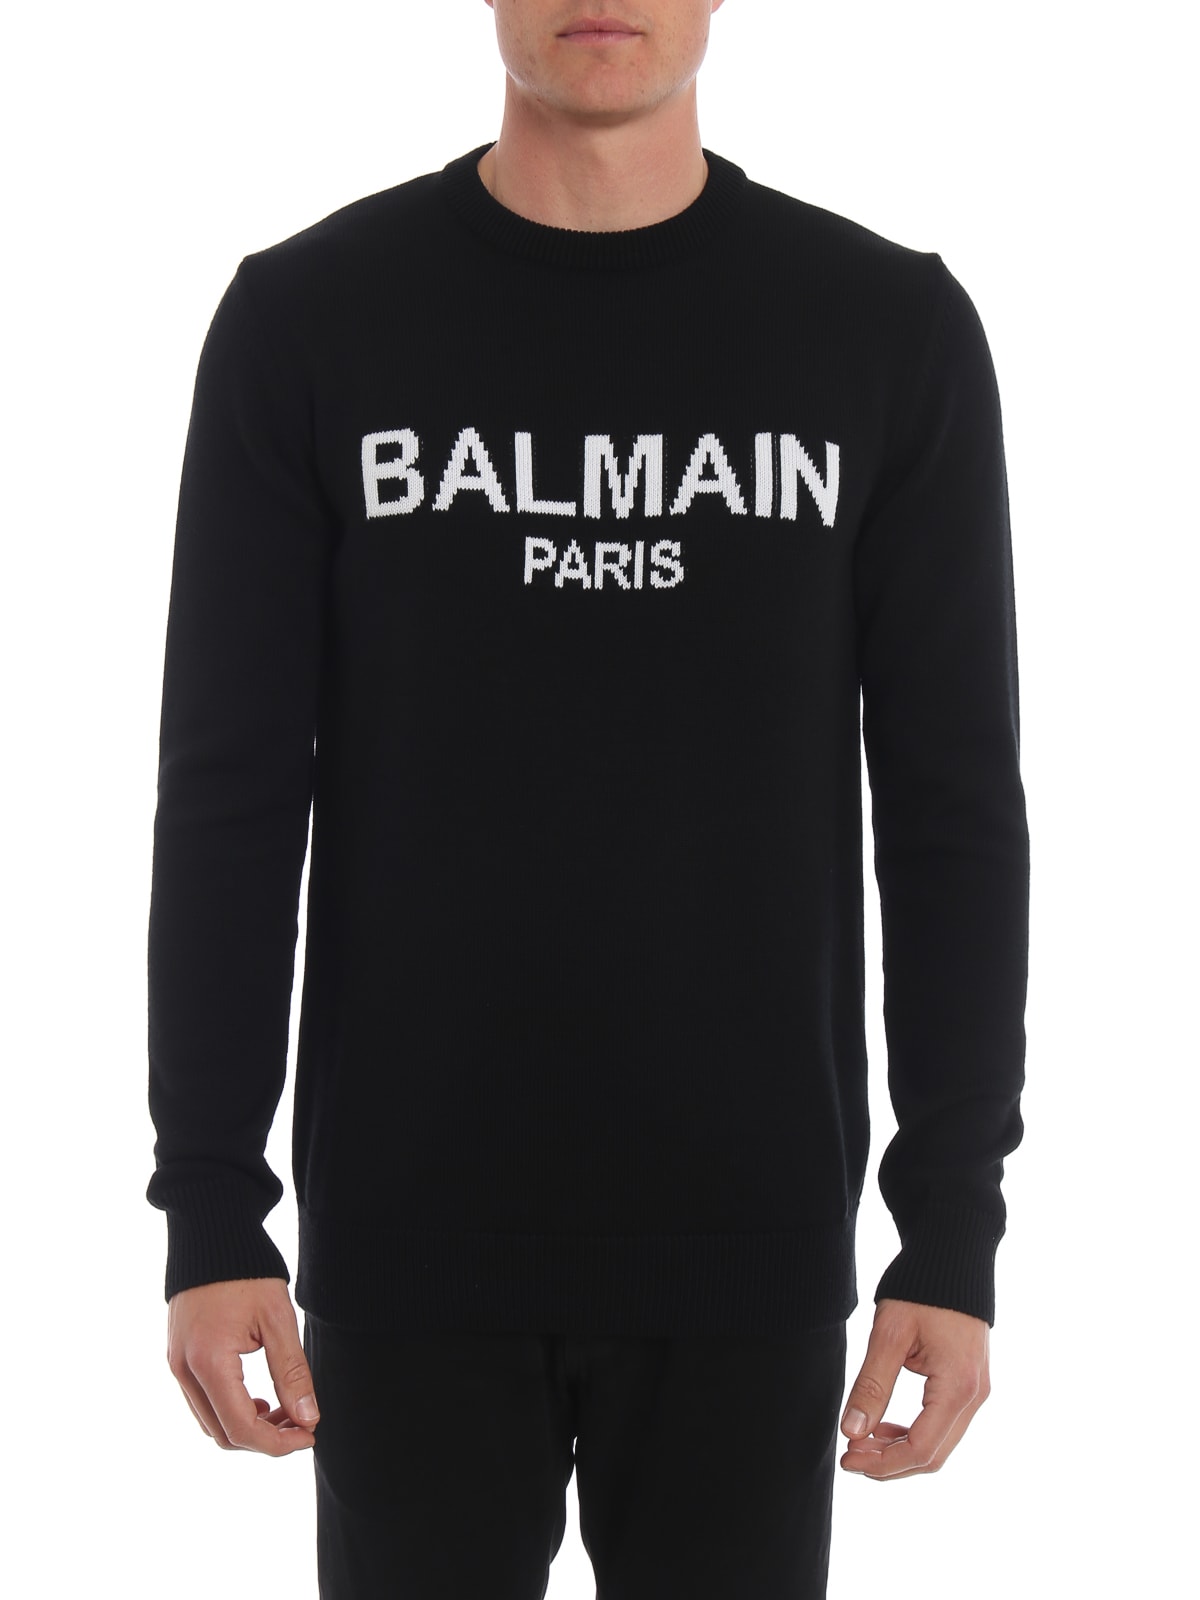 Balmain Balmain Balmain Paris Sweater - Black/white - 10875576 | italist